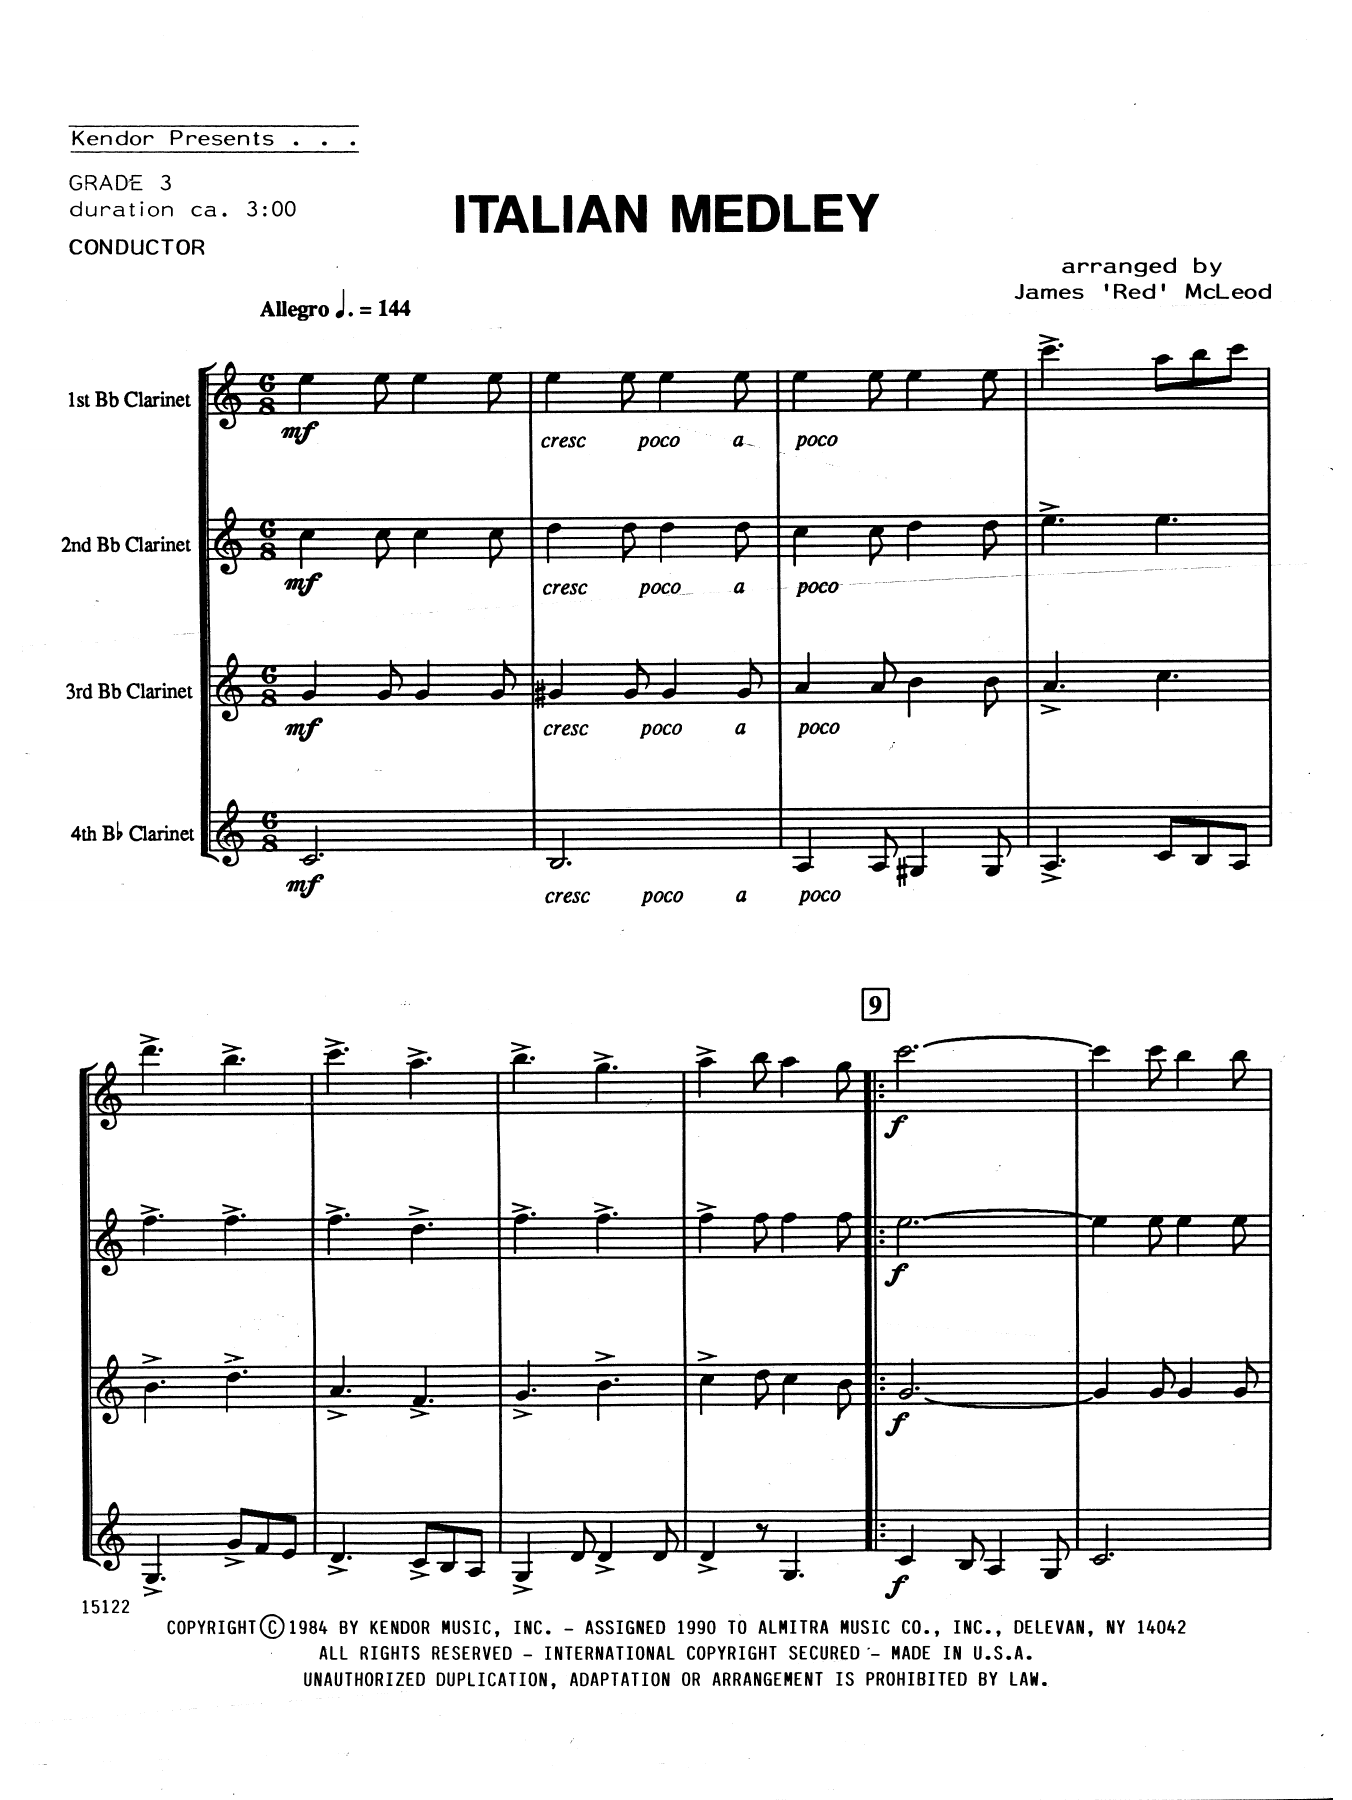 Download James 'Red' McLeod Italian Medley - Full Score Sheet Music